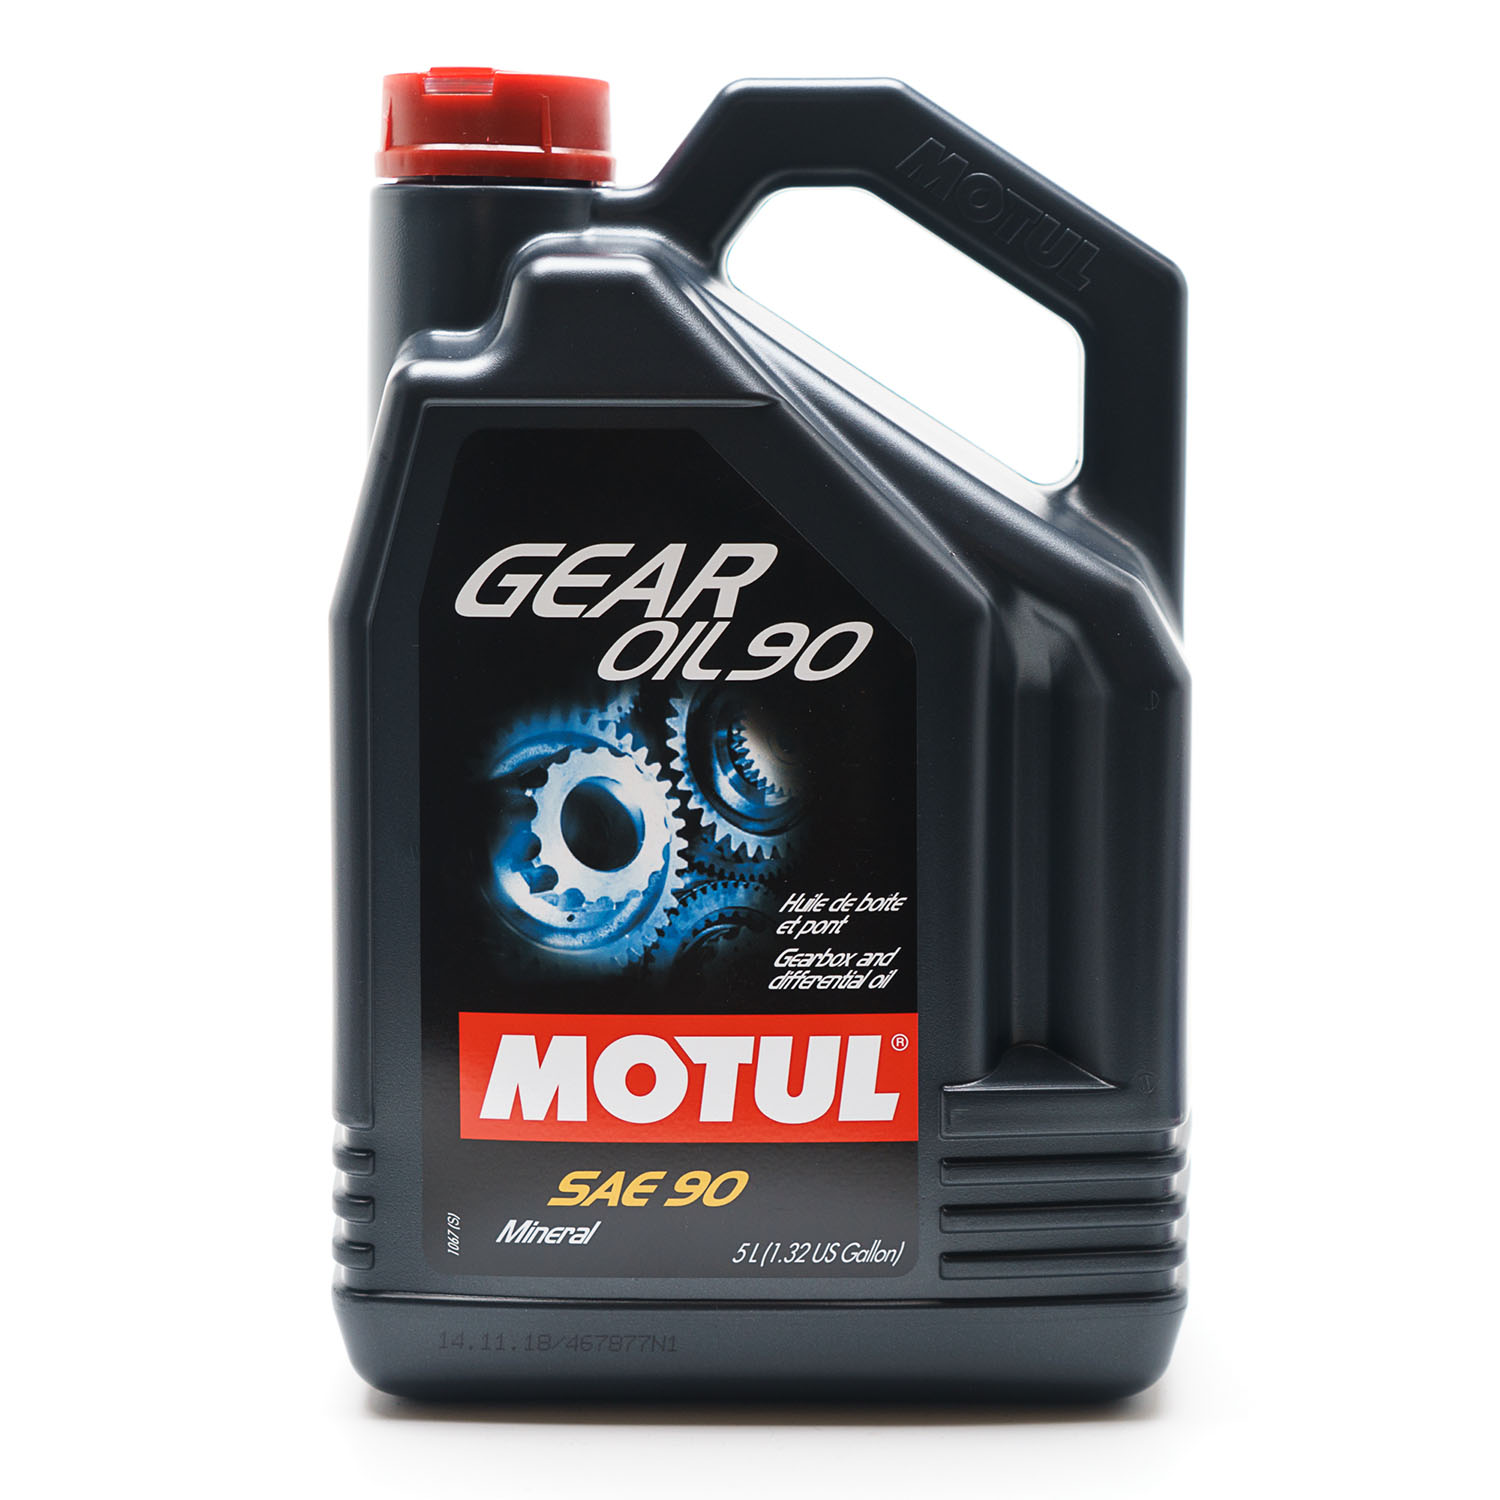 Motul Gear Oil SAE 90 (5L)